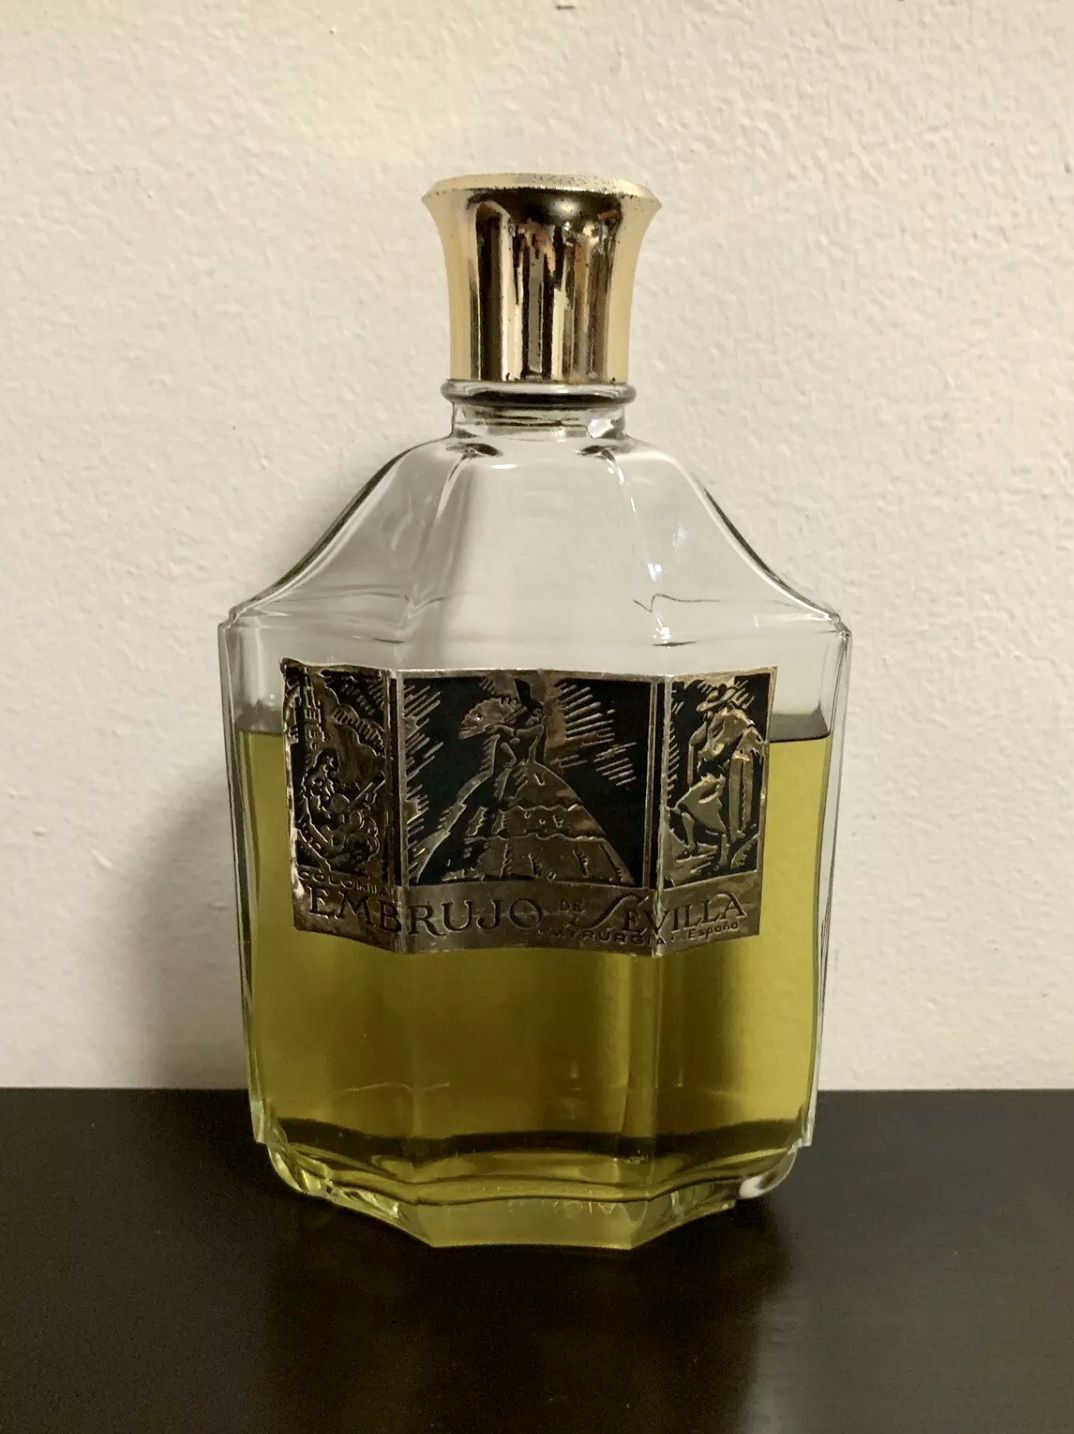 Super Rare Antique Myrurgia Embrujo De Sevilla Perfume HUGE BOTTLE !